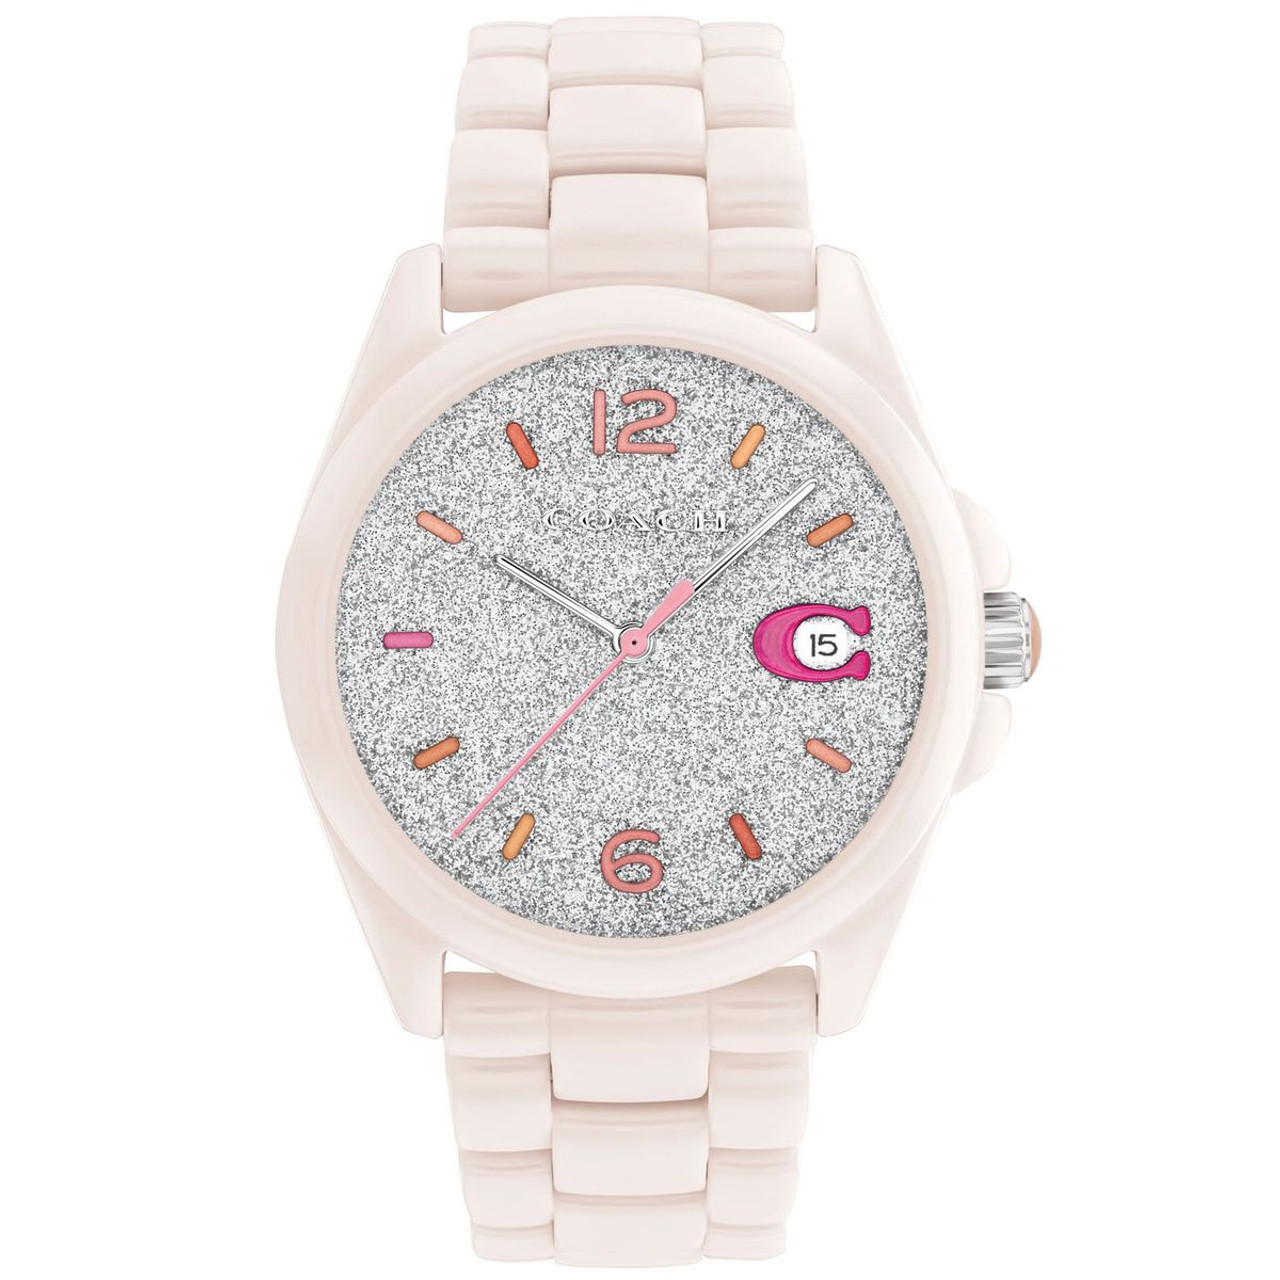 Coach Women's Greyson Watch product image